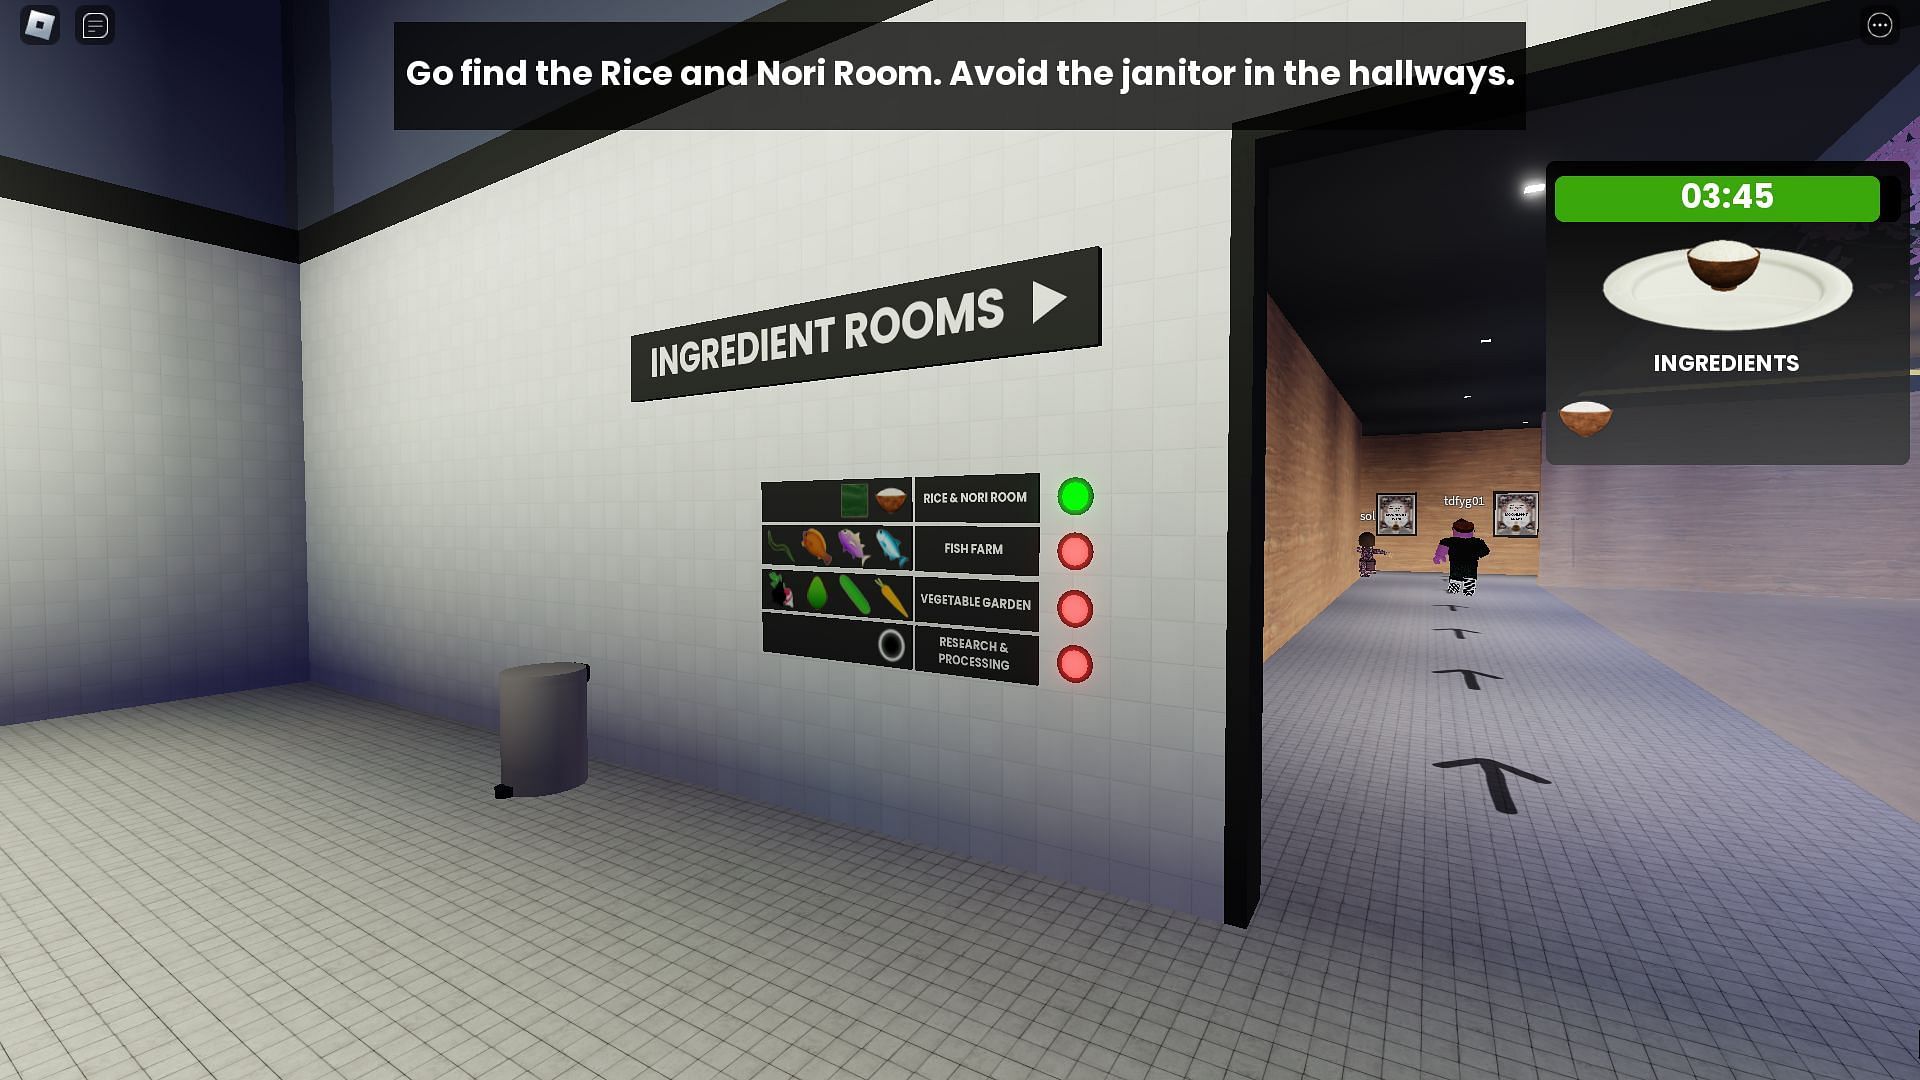 The Ingredients Room (Image via Roblox)